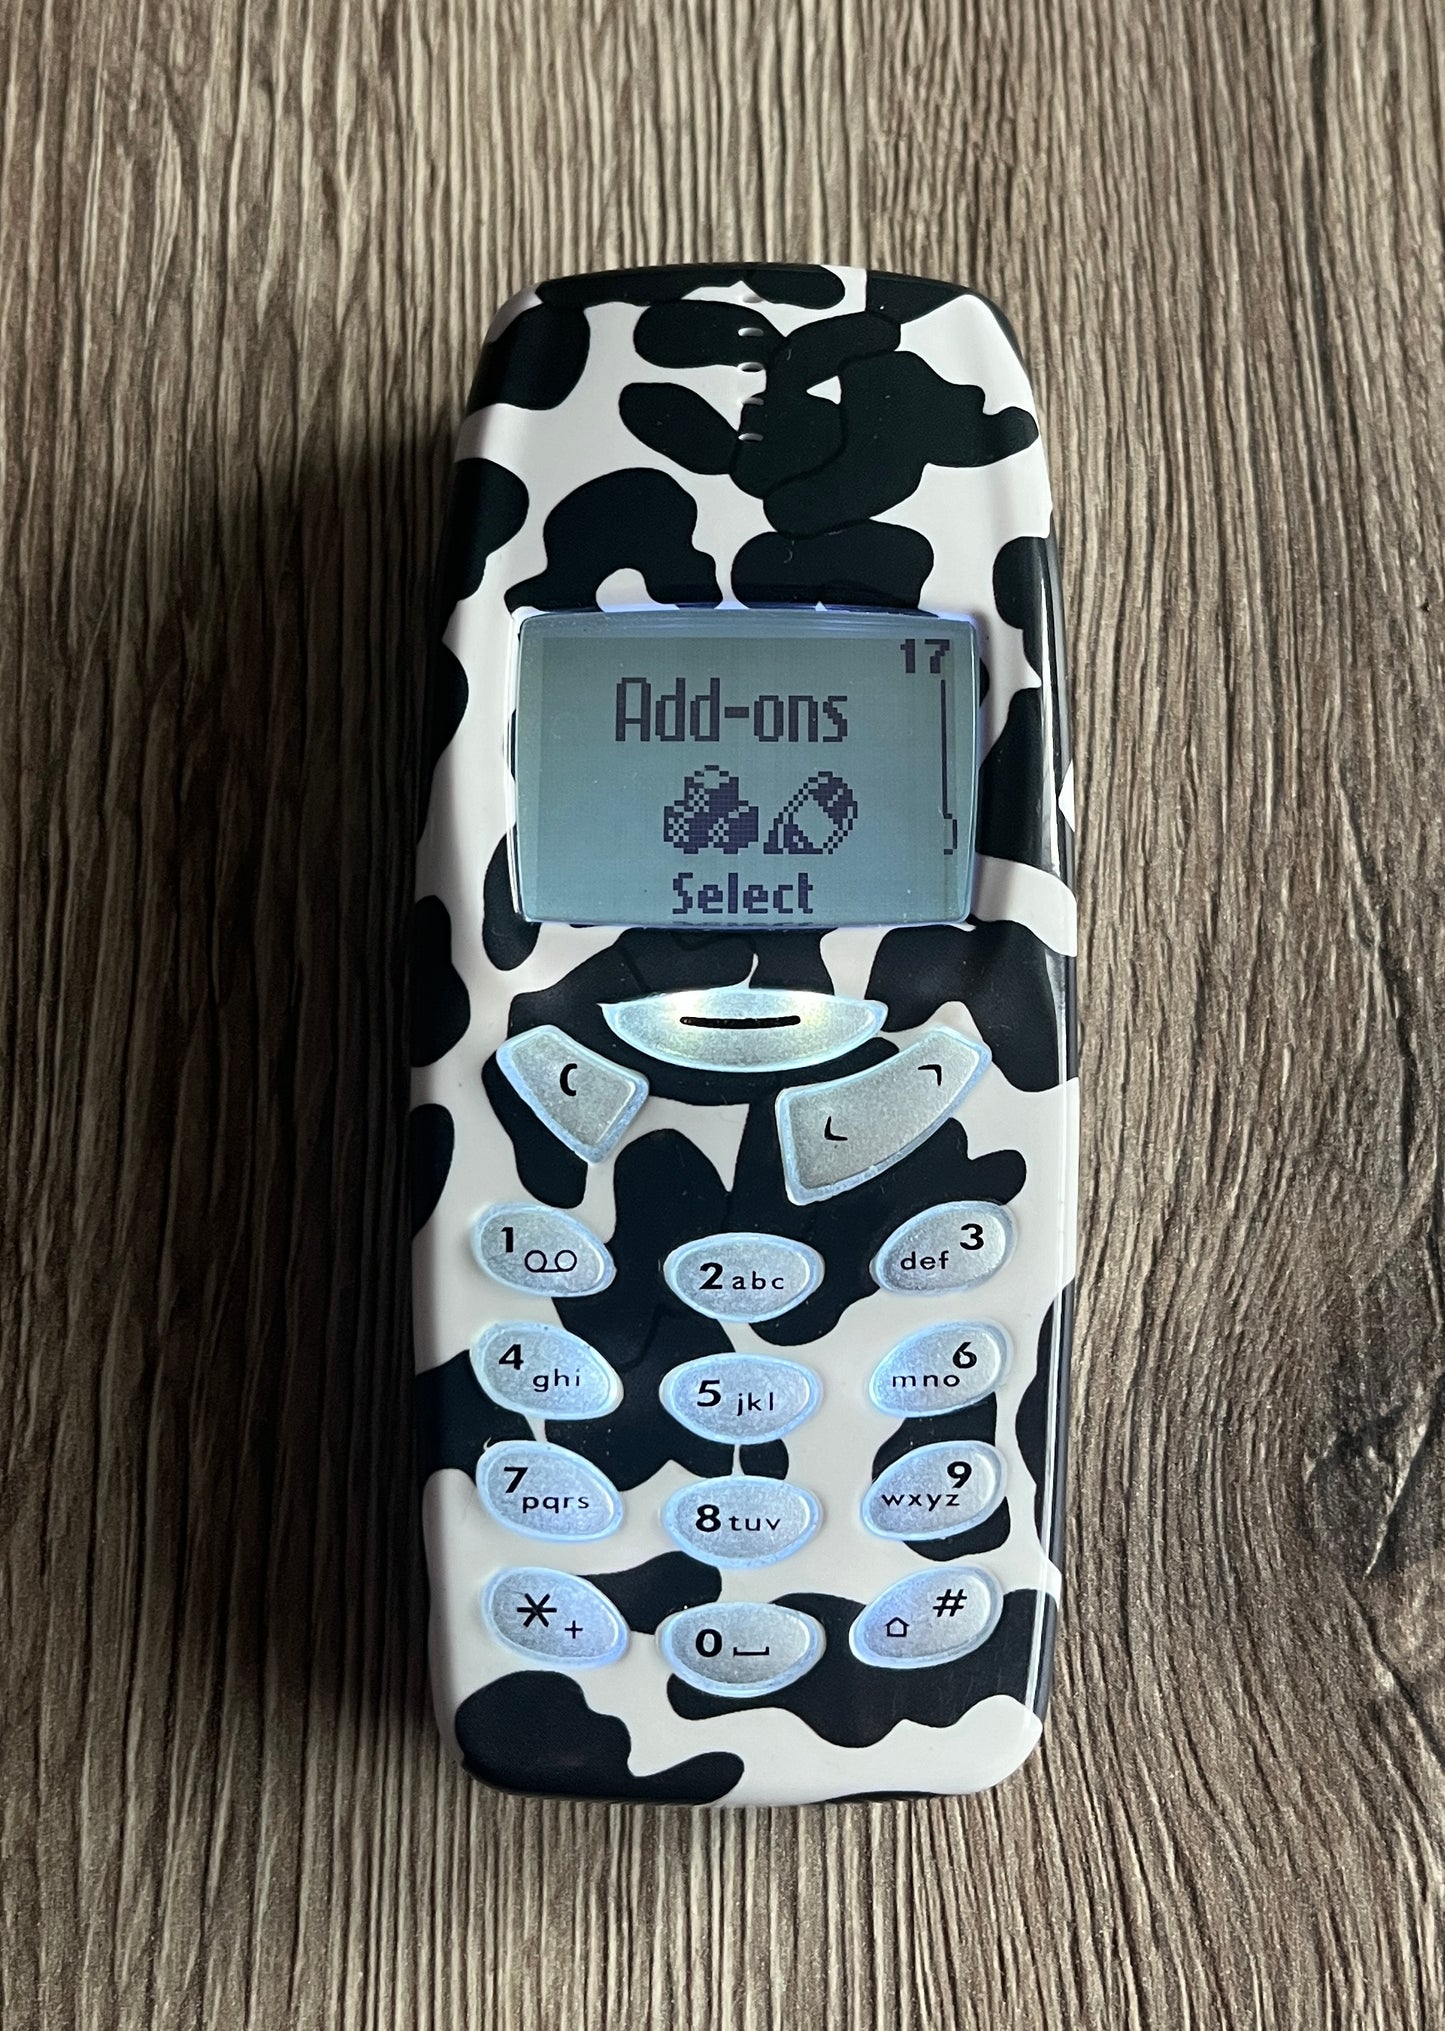 Modified Nokia 3310 3330 phone, 20 Games